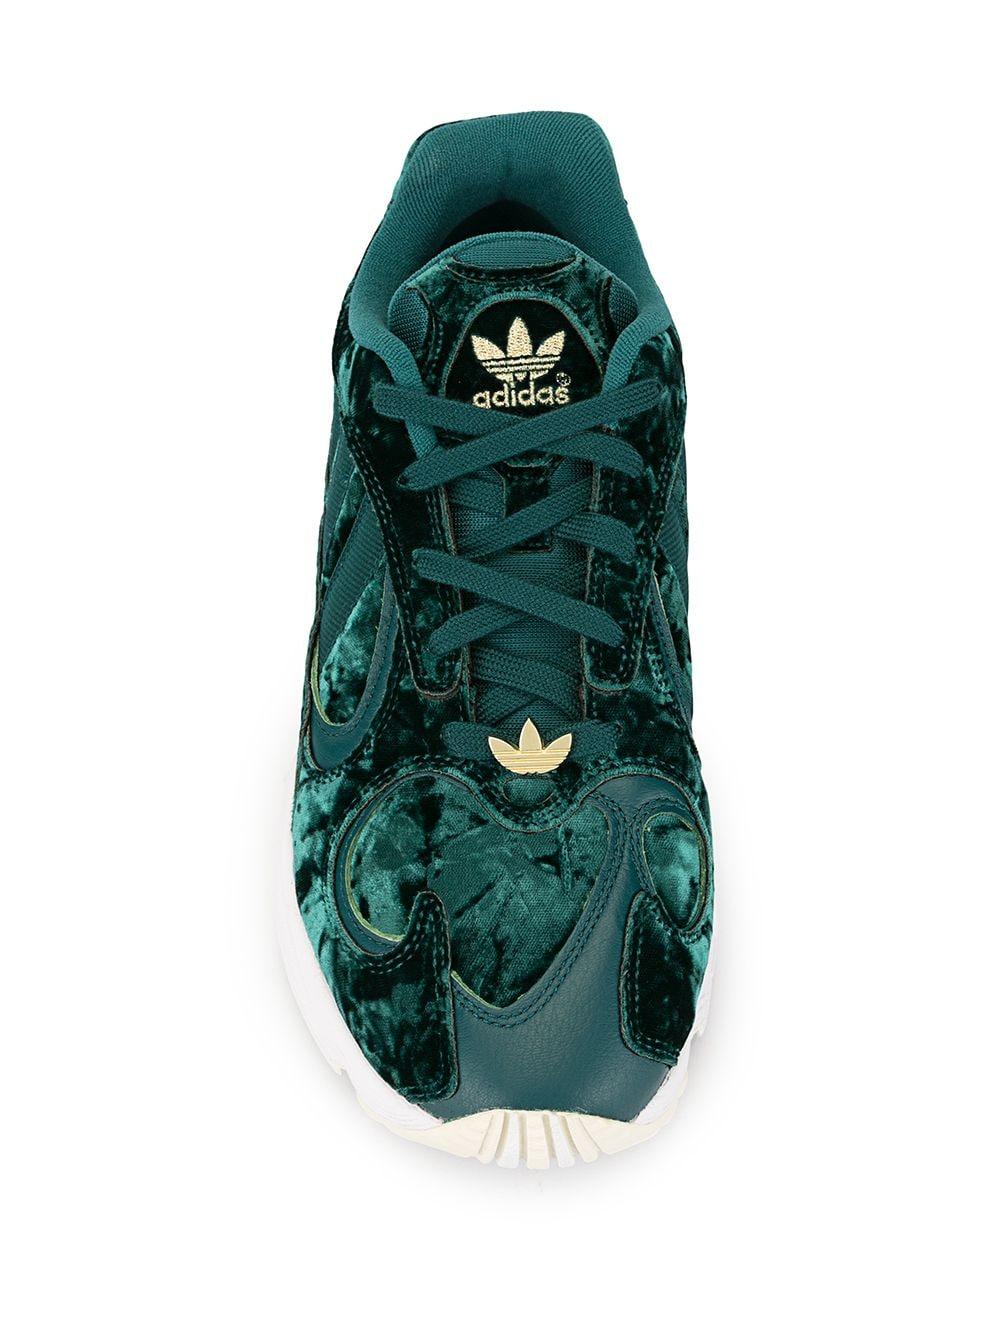 adidas Yung-1 Velvet Low-top Sneakers in Green for Men - Lyst